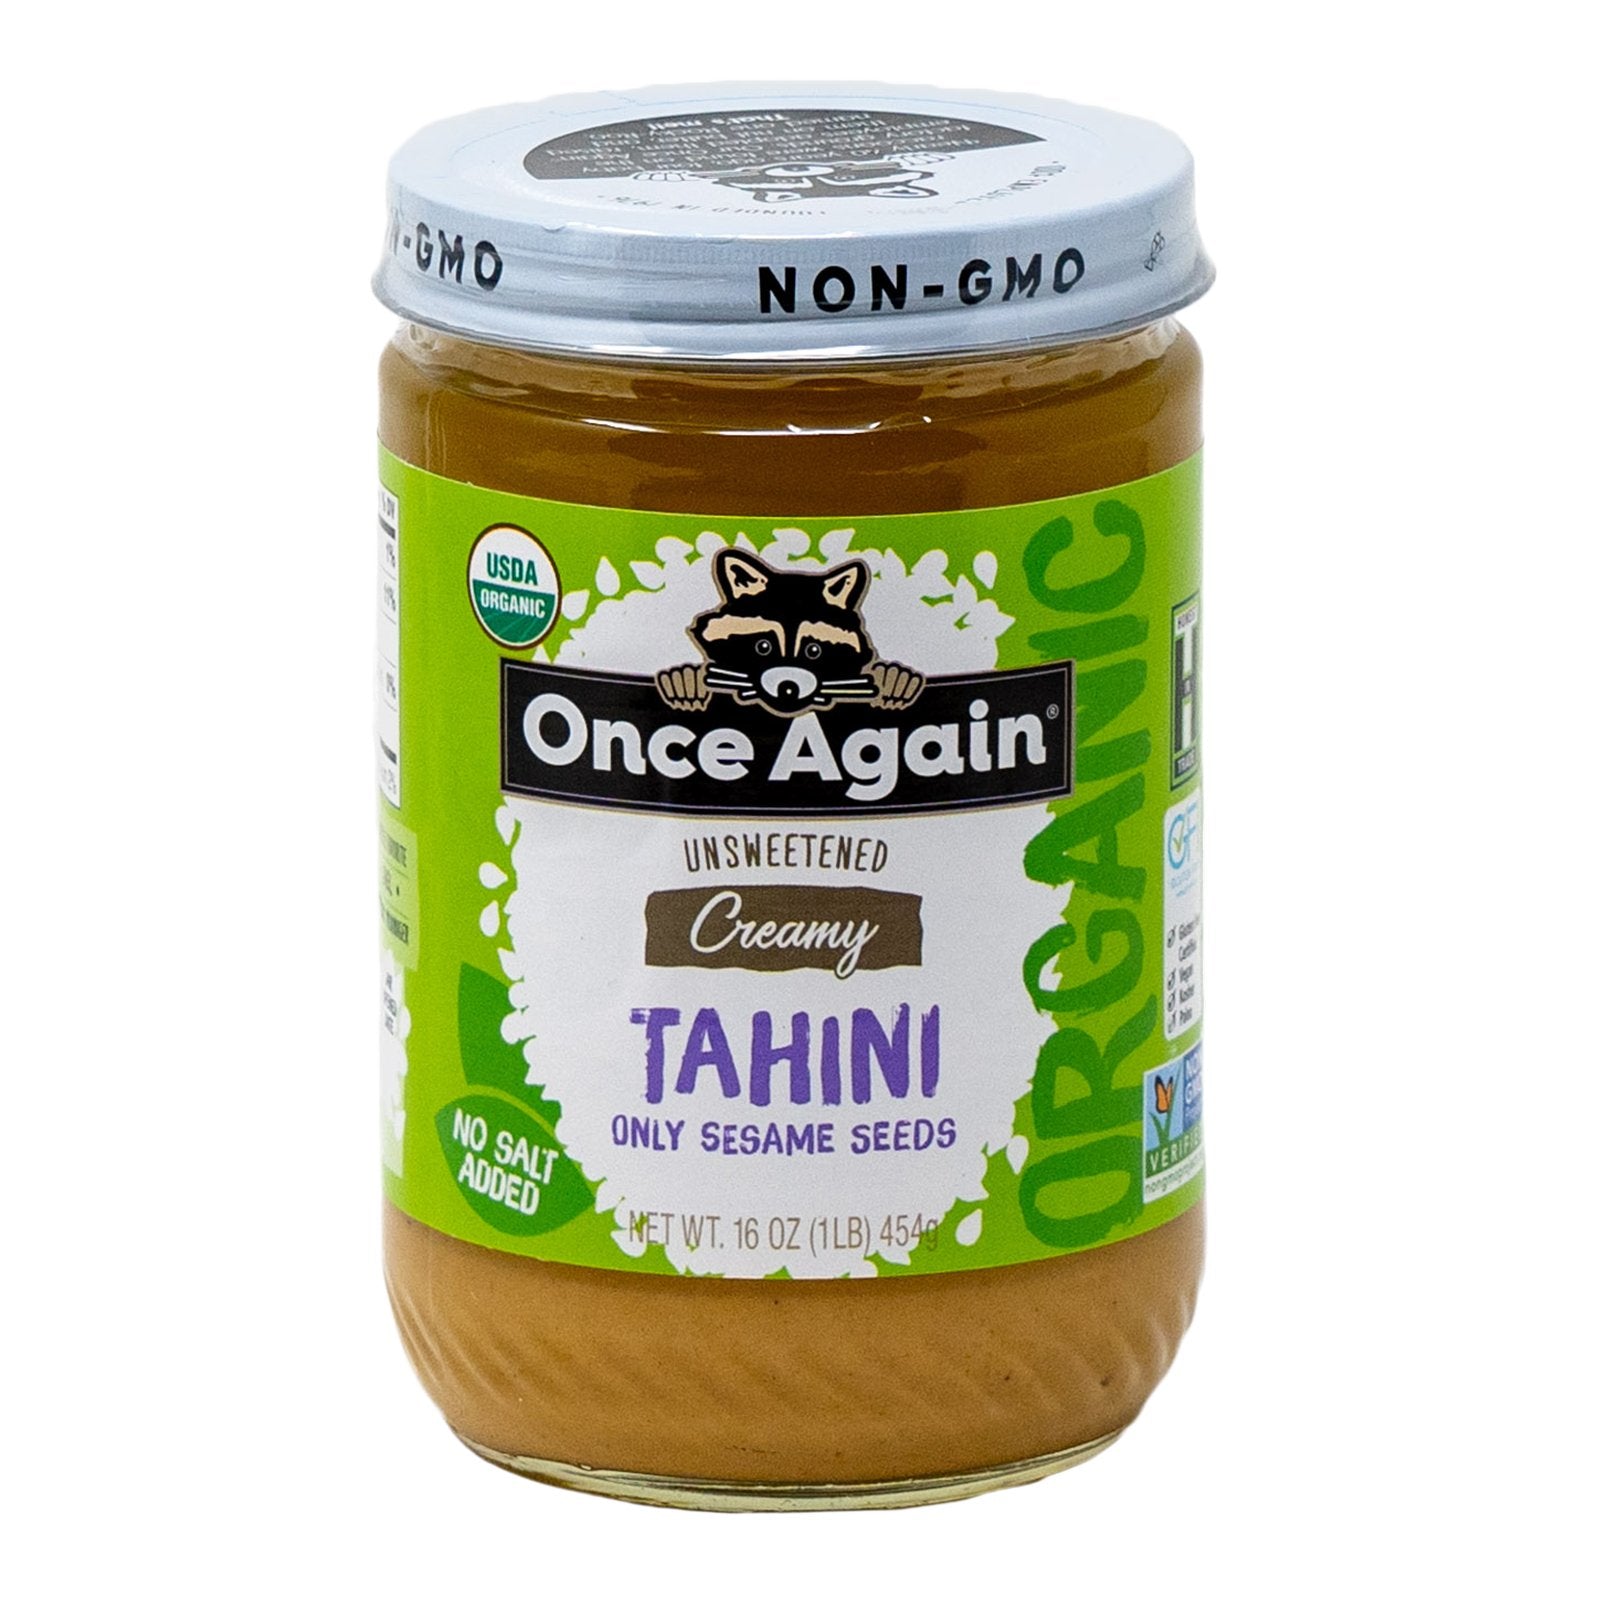 Tahini Sesame Seed Butter, Organic